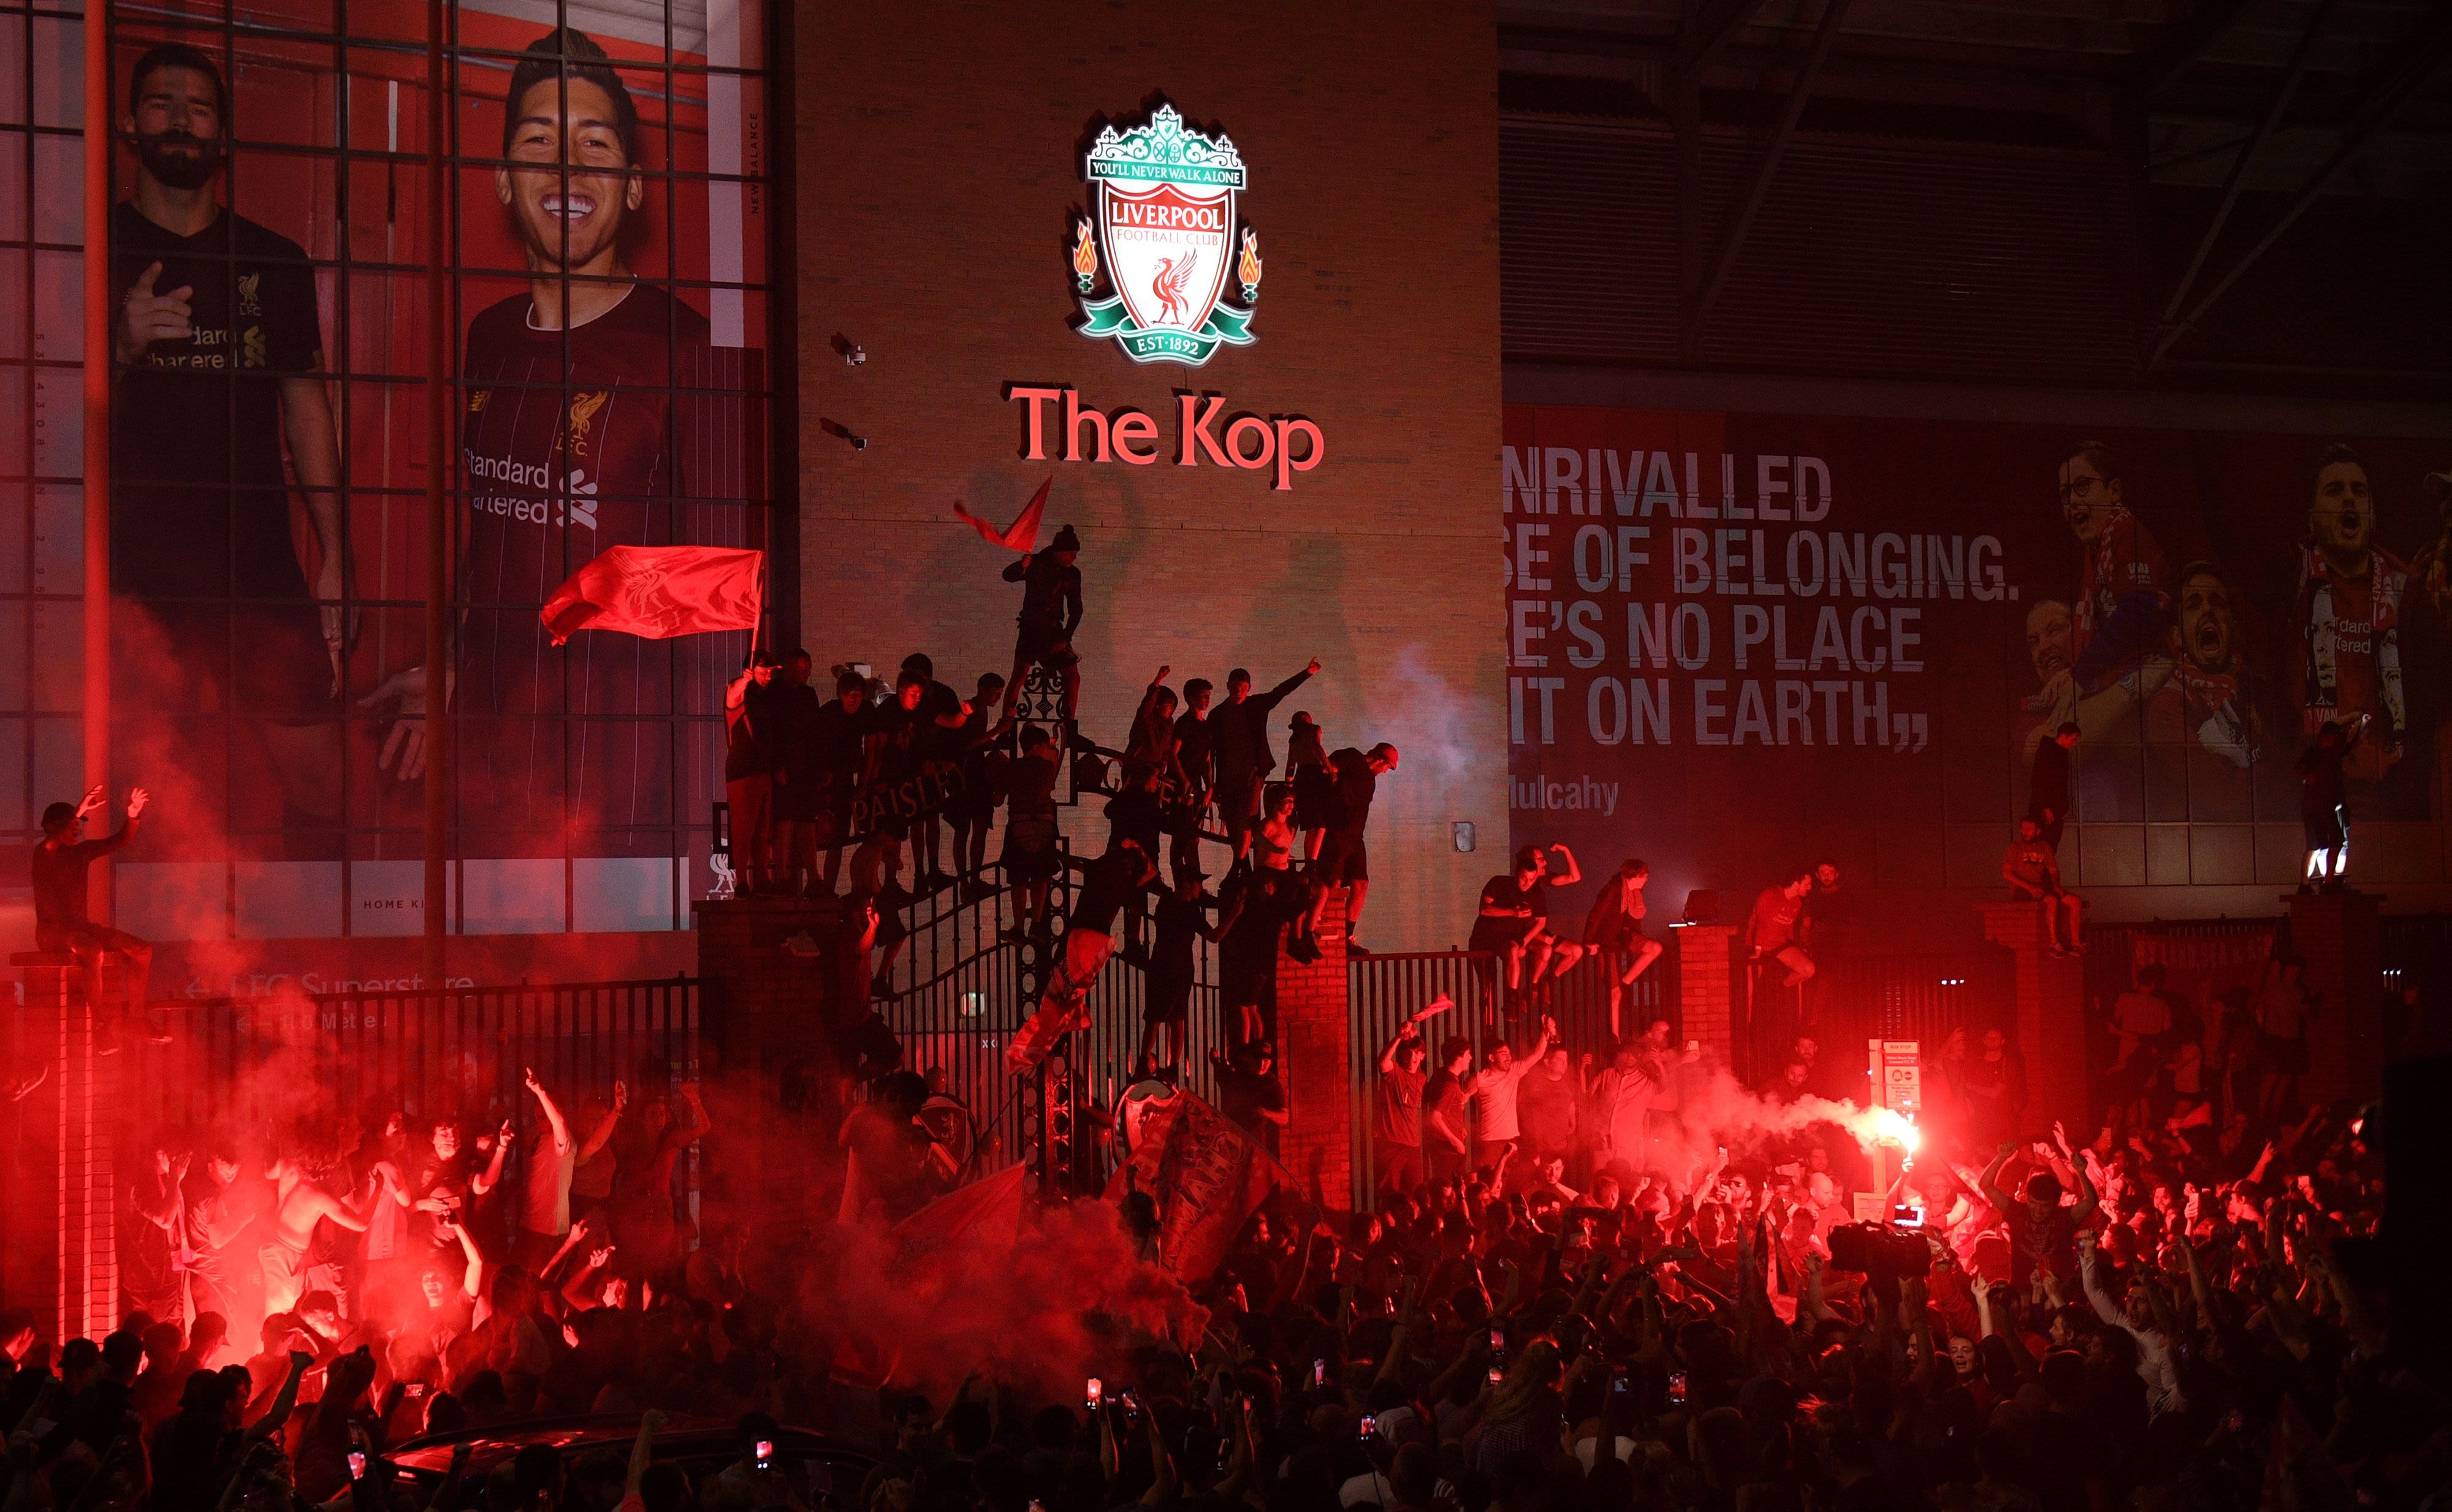 Liverpool FC: Fans of Premier League match with Chelsea CNN